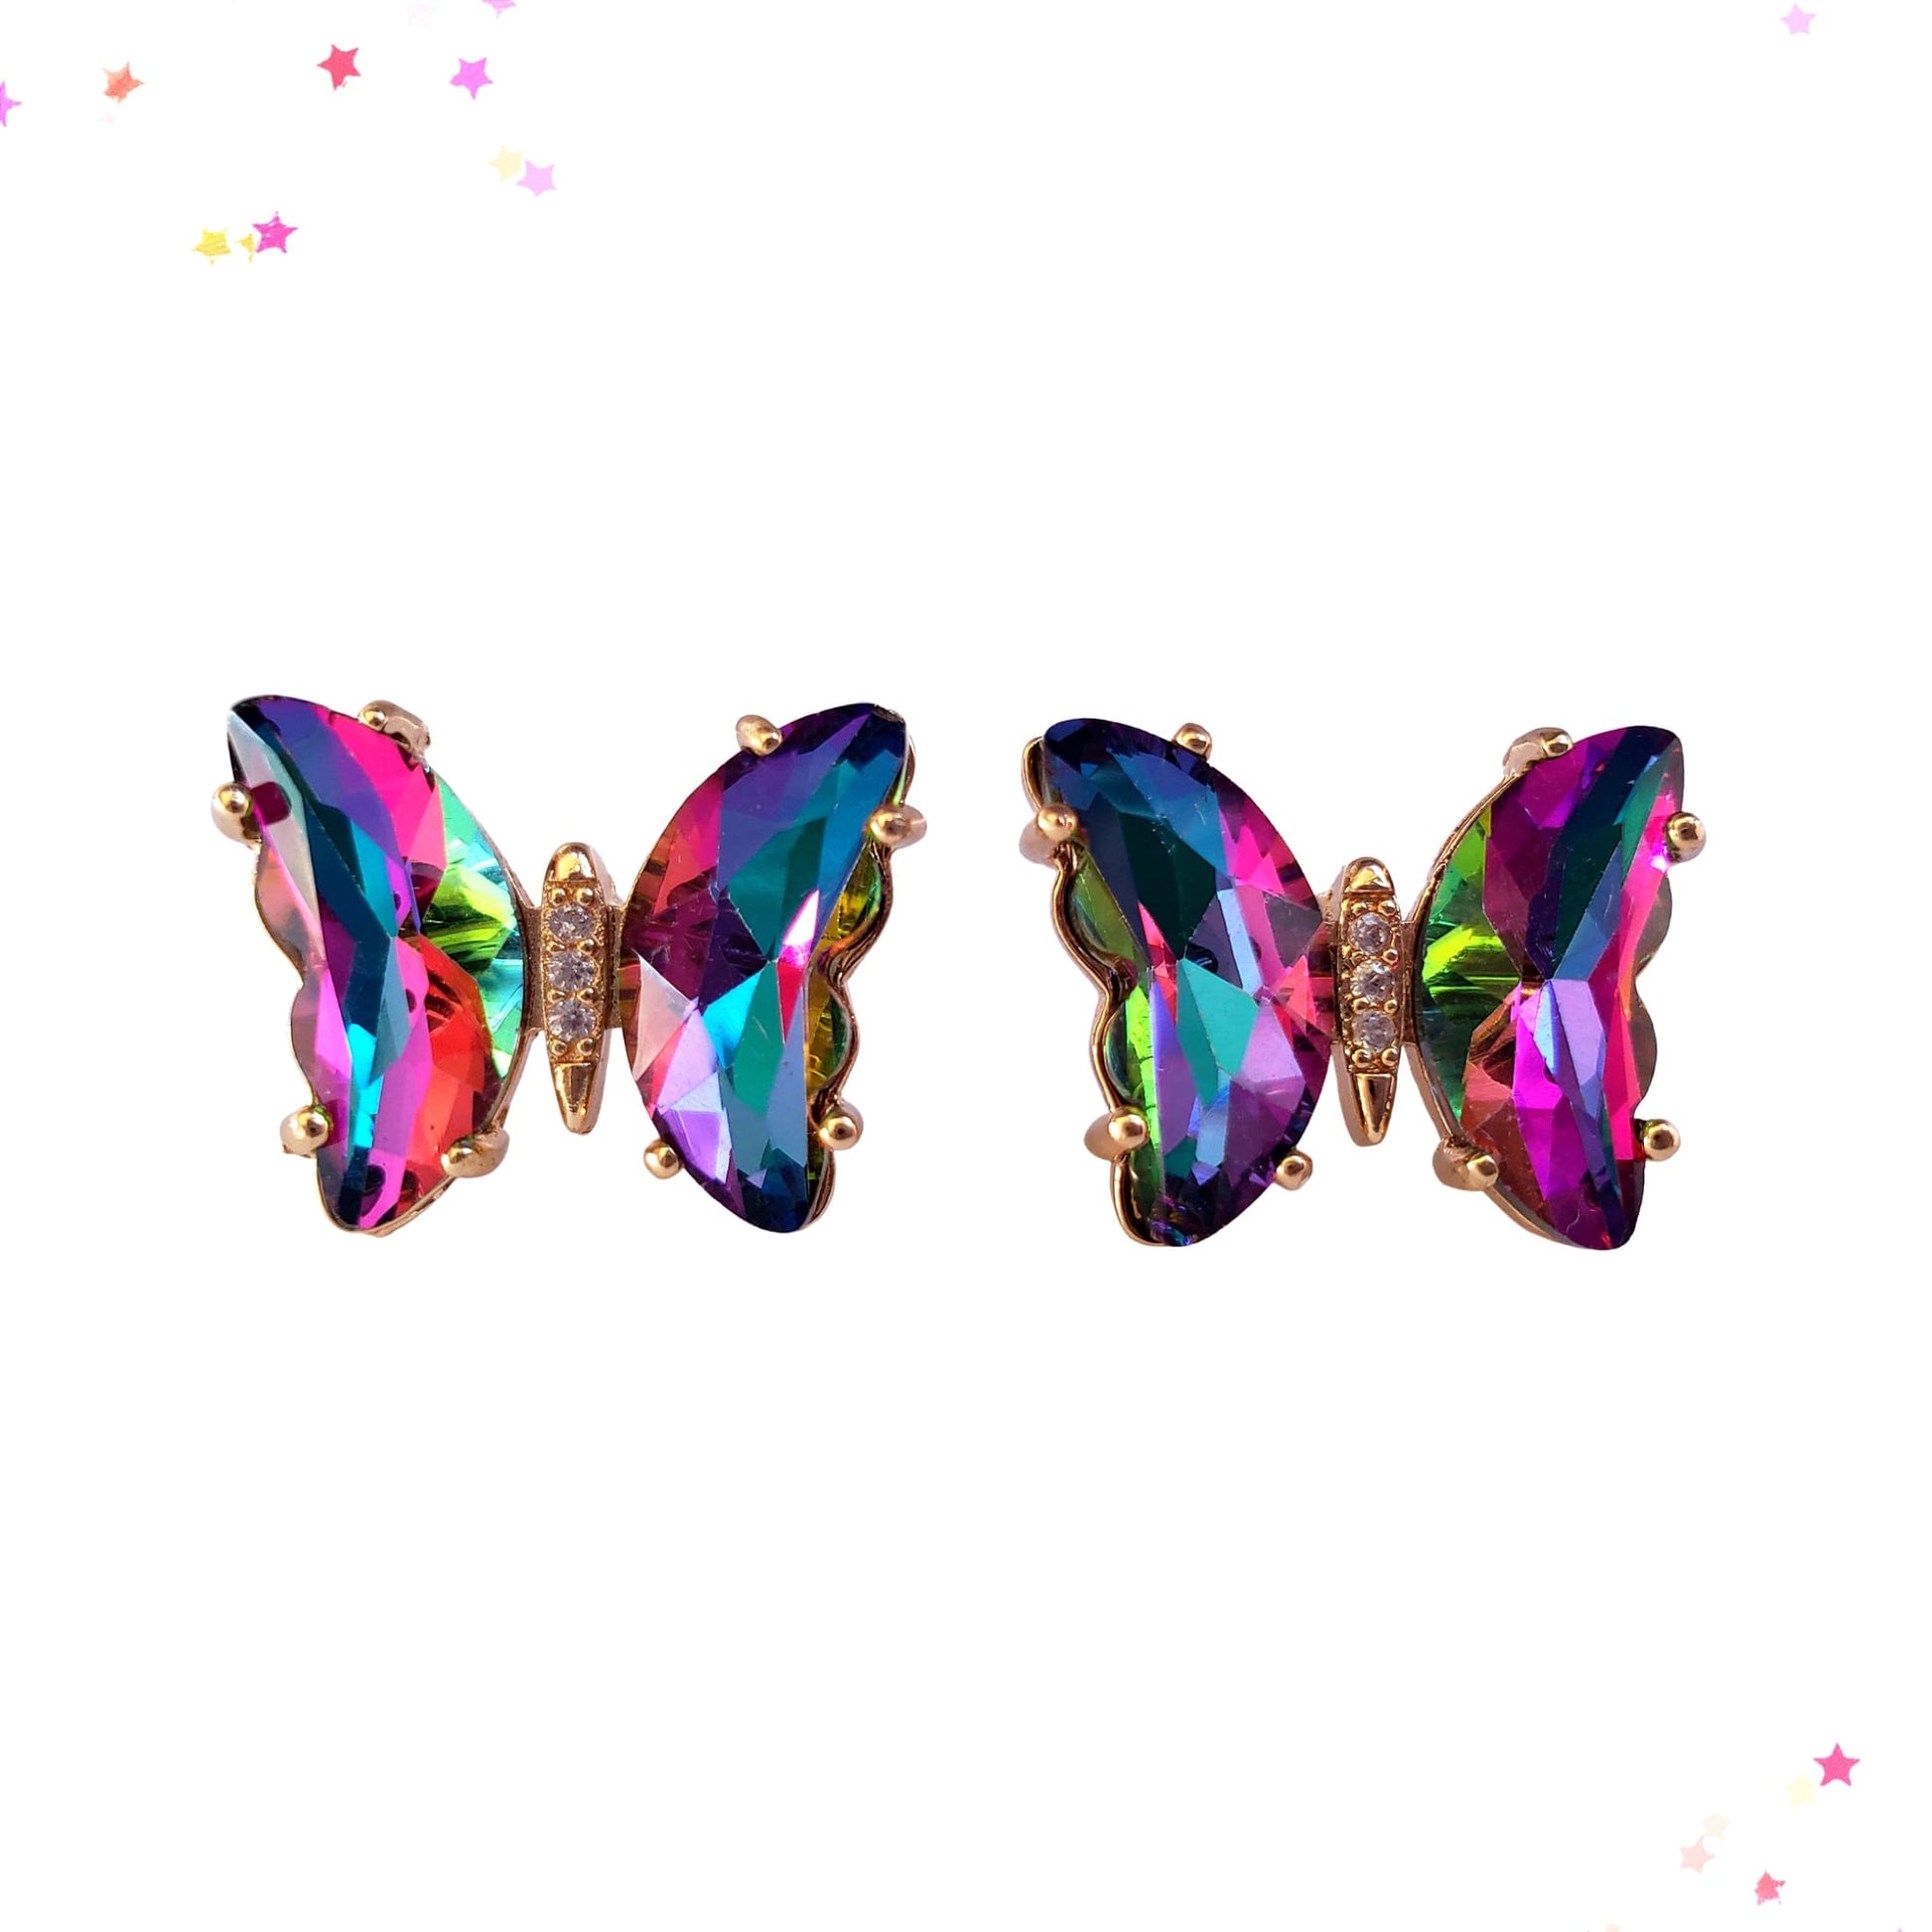 Butterfly Earrings in Rainbow from Confetti Kitty, Only 12.99